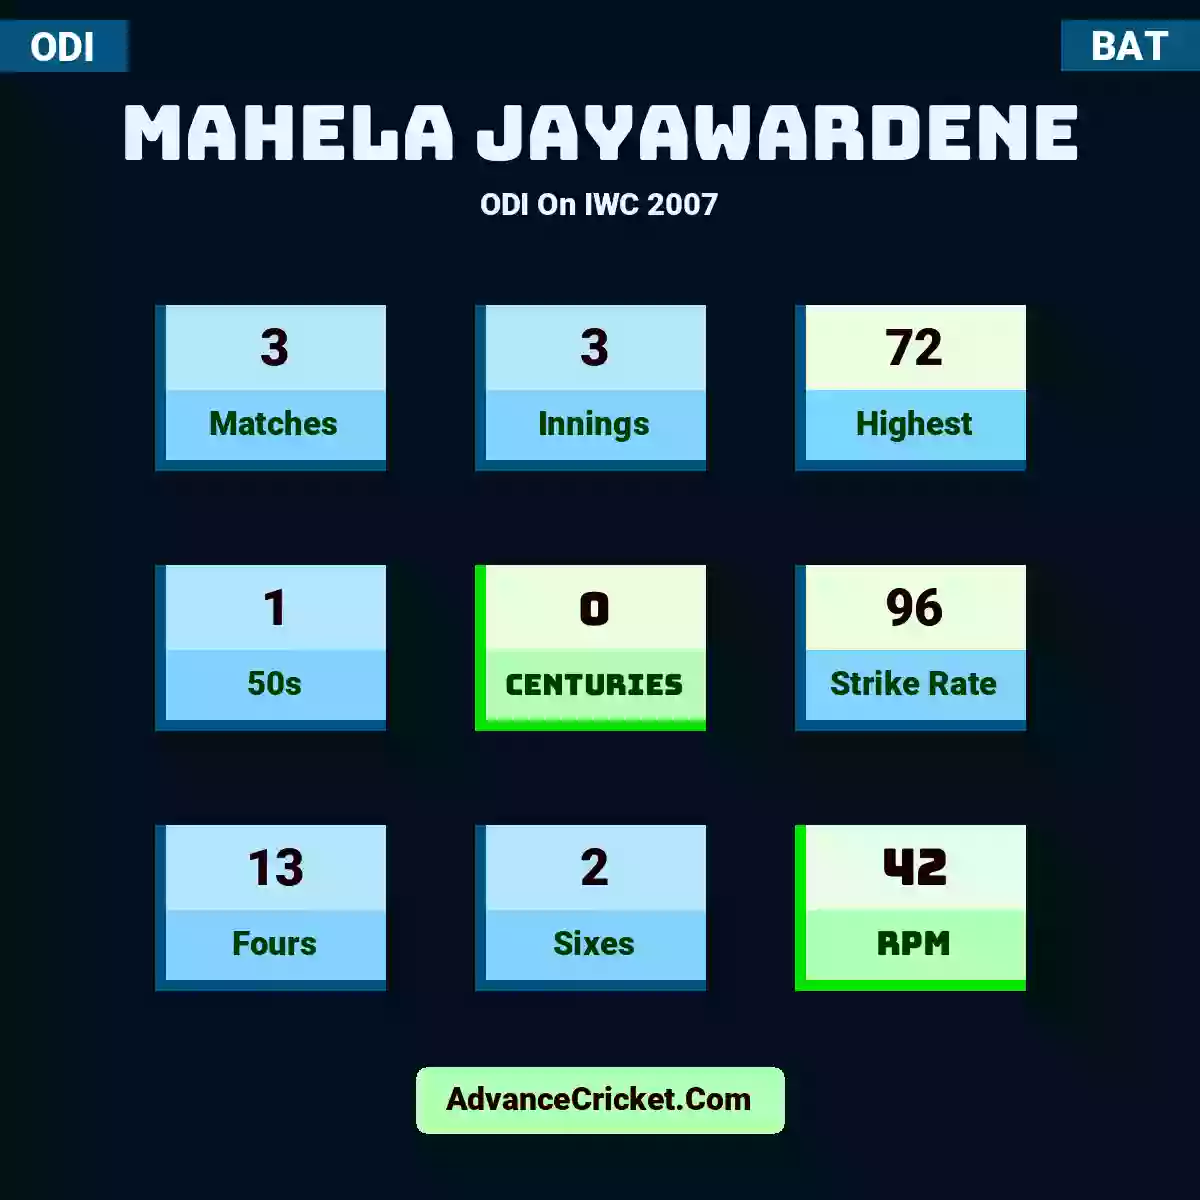 Mahela Jayawardene ODI  On IWC 2007, Mahela Jayawardene played 3 matches, scored 72 runs as highest, 1 half-centuries, and 0 centuries, with a strike rate of 96. M.Jayawardene hit 13 fours and 2 sixes, with an RPM of 42.